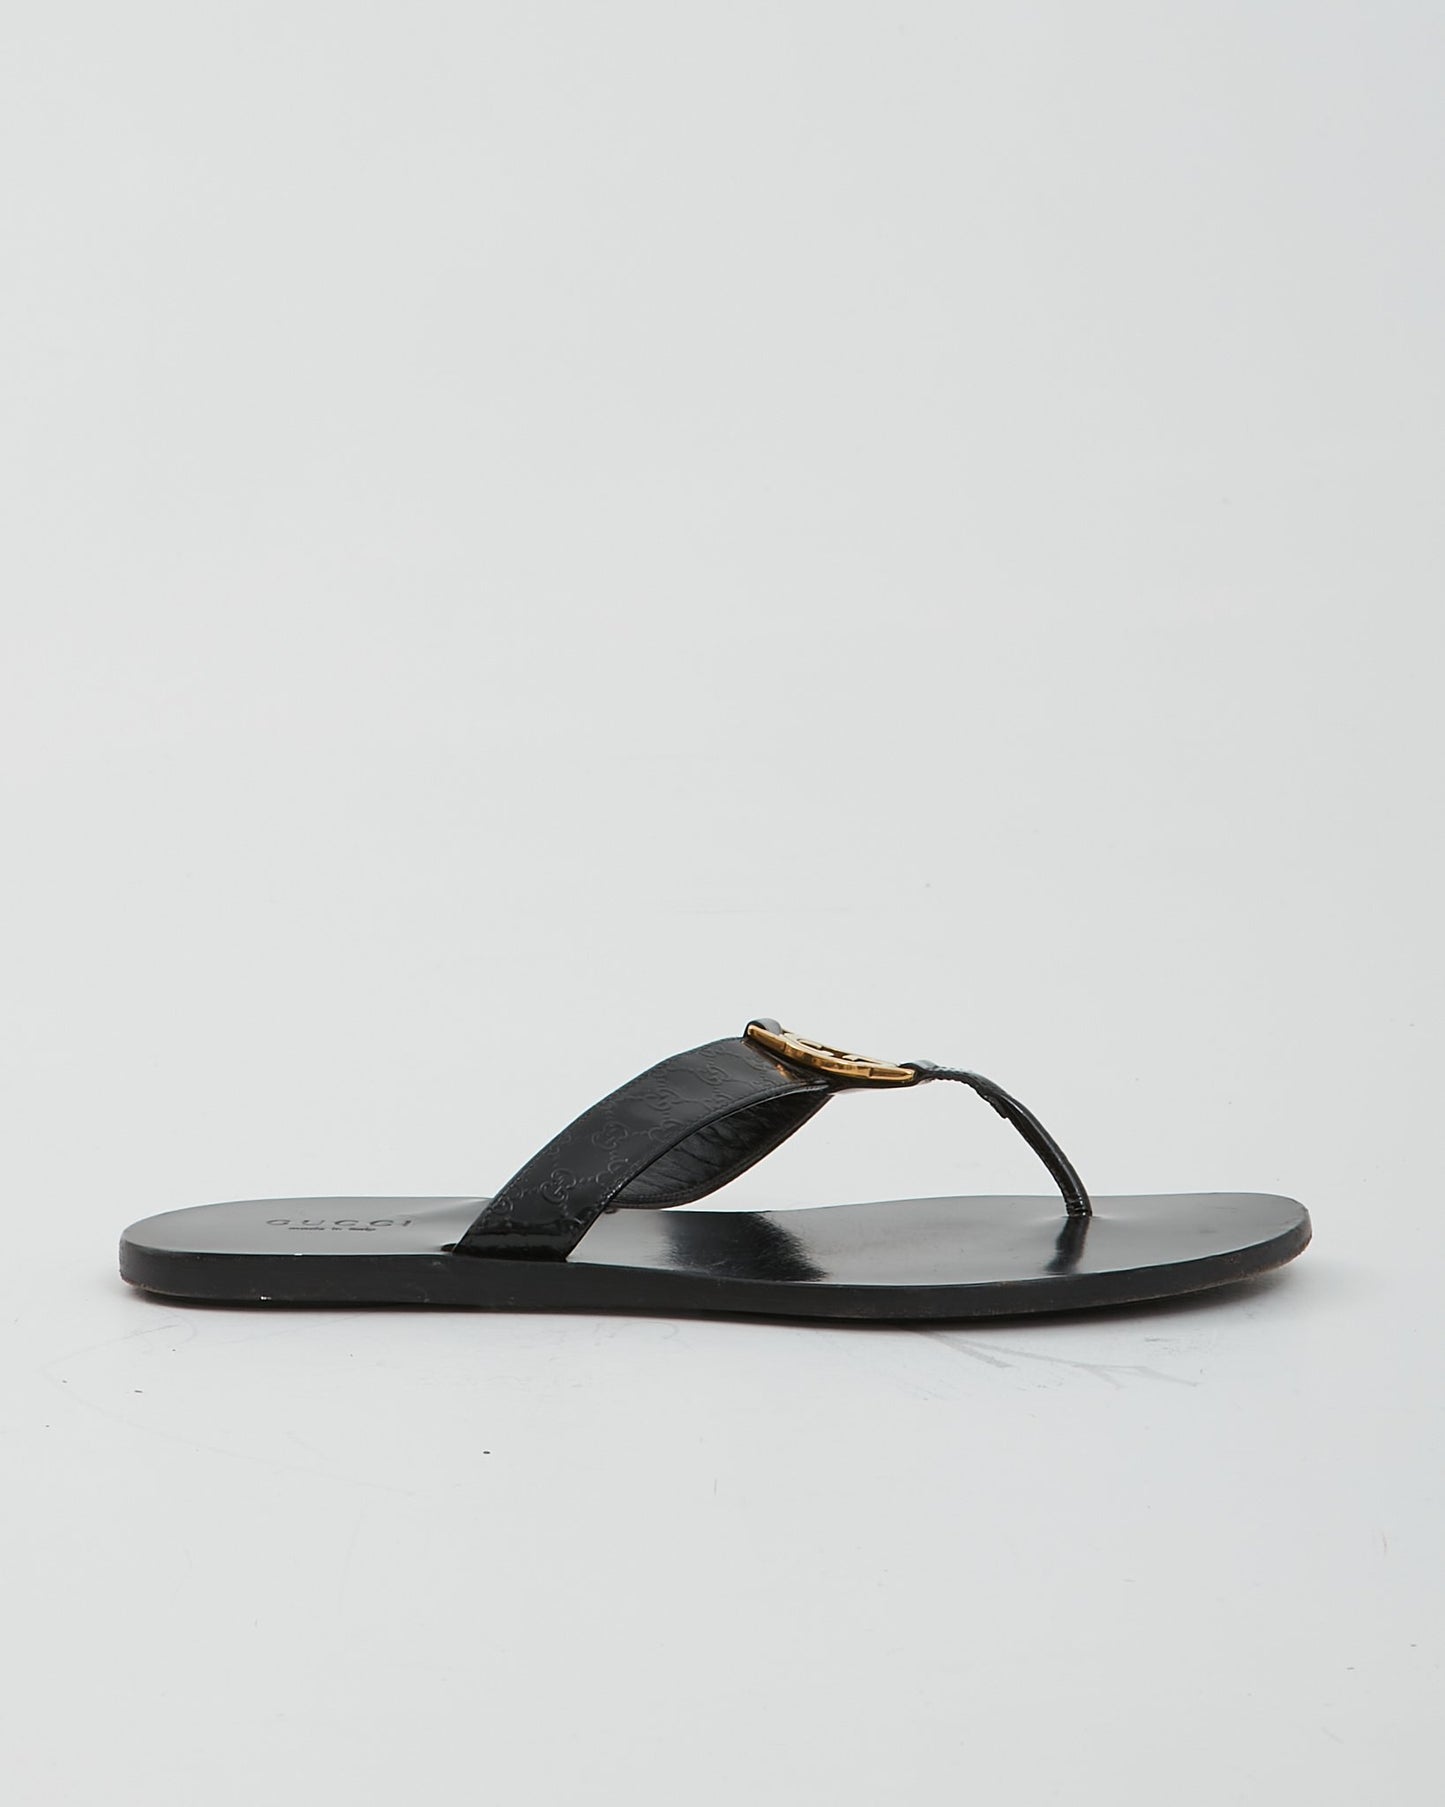 Sandale plate avec logo GG noir Gucci - 36,5